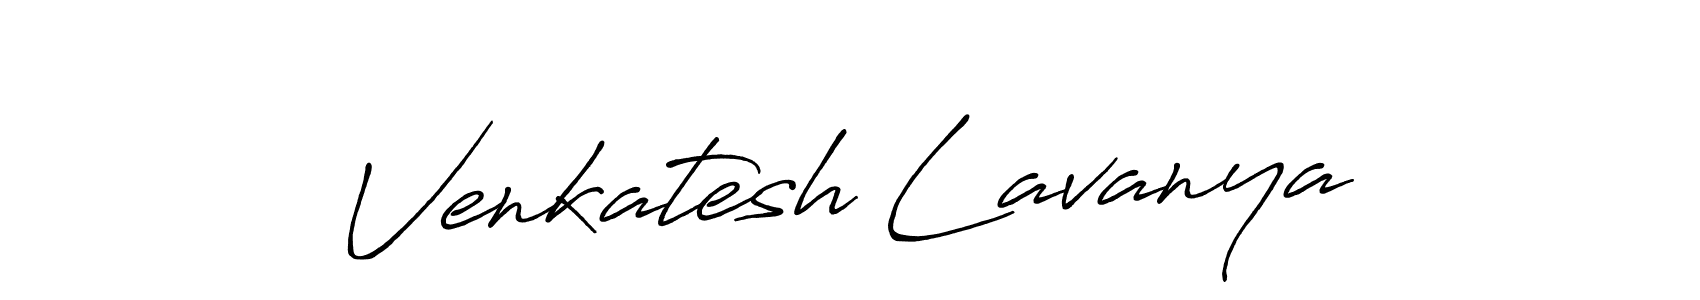 Make a beautiful signature design for name Venkatesh Lavanya. Use this online signature maker to create a handwritten signature for free. Venkatesh Lavanya signature style 7 images and pictures png